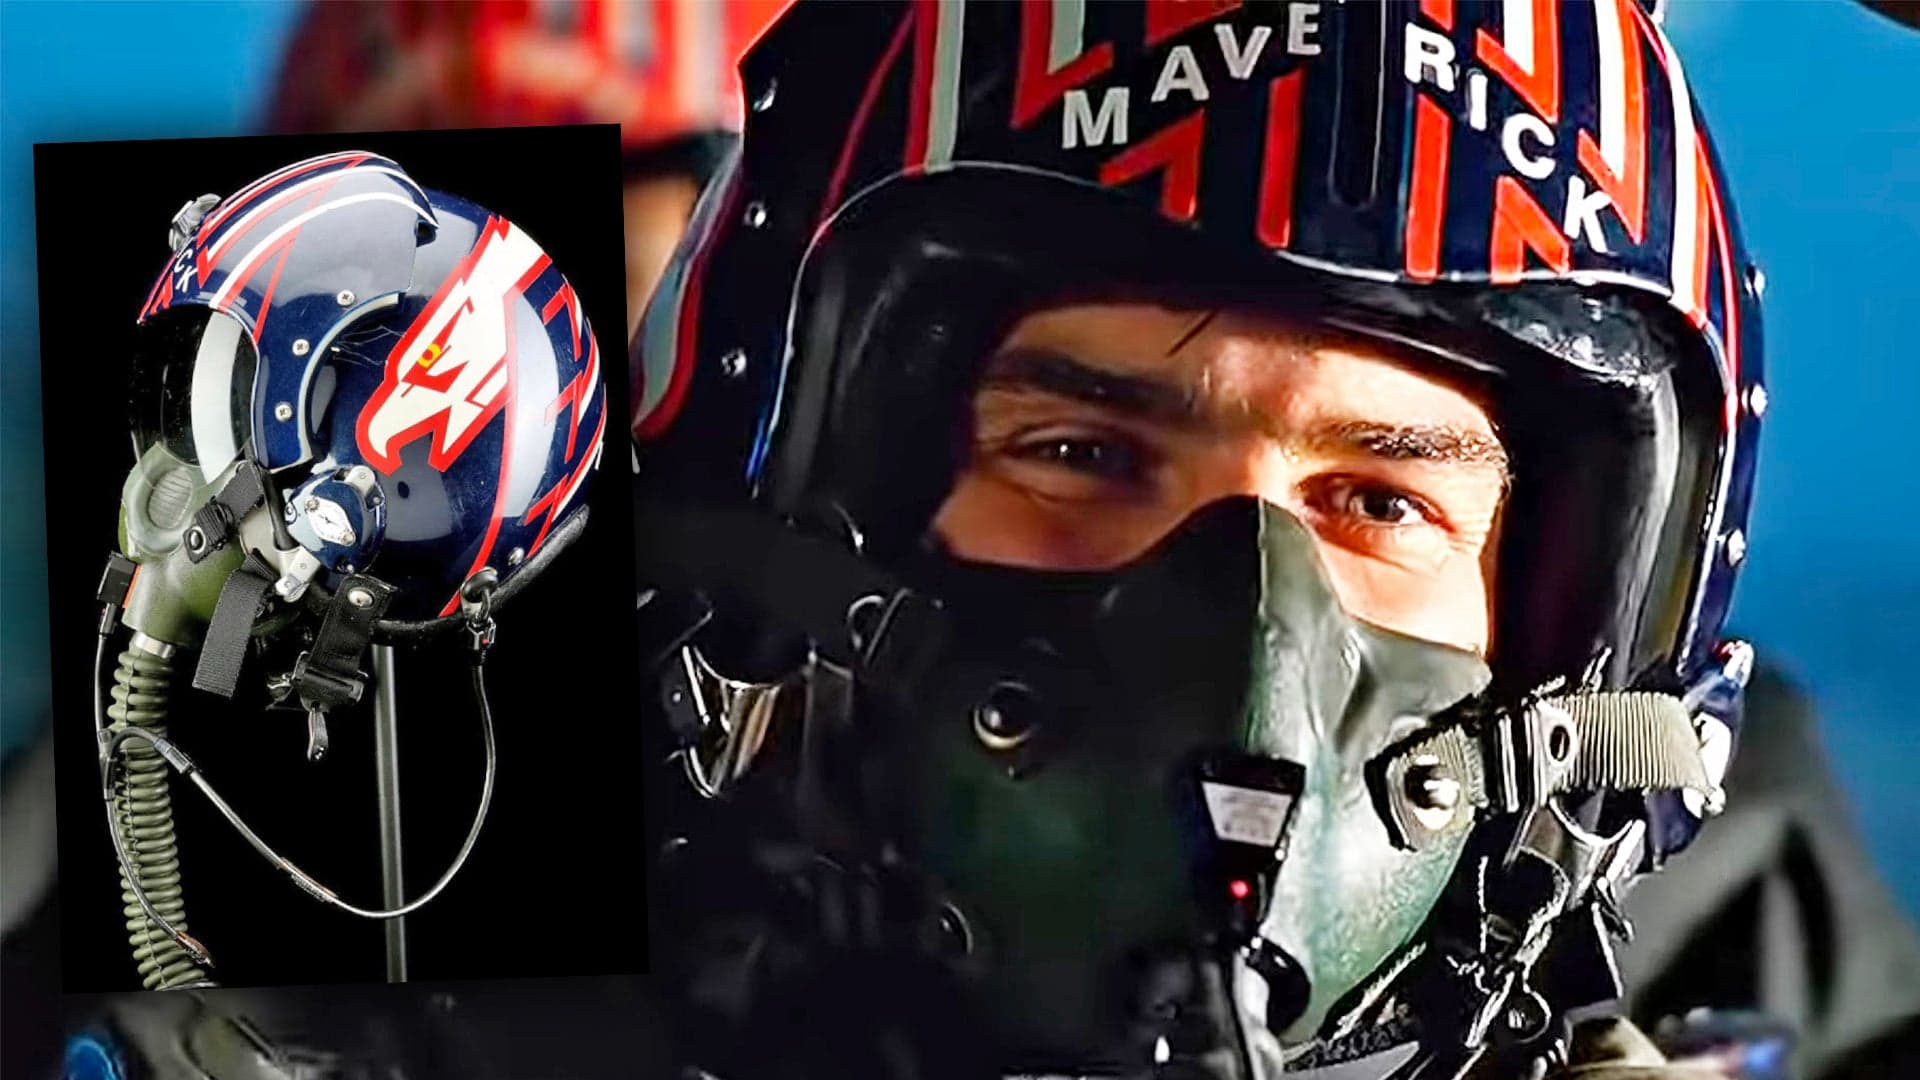 Tom Cruise’s Original “Maverick” Fighter Pilot Helmet From Top Gun Is Up For Auction